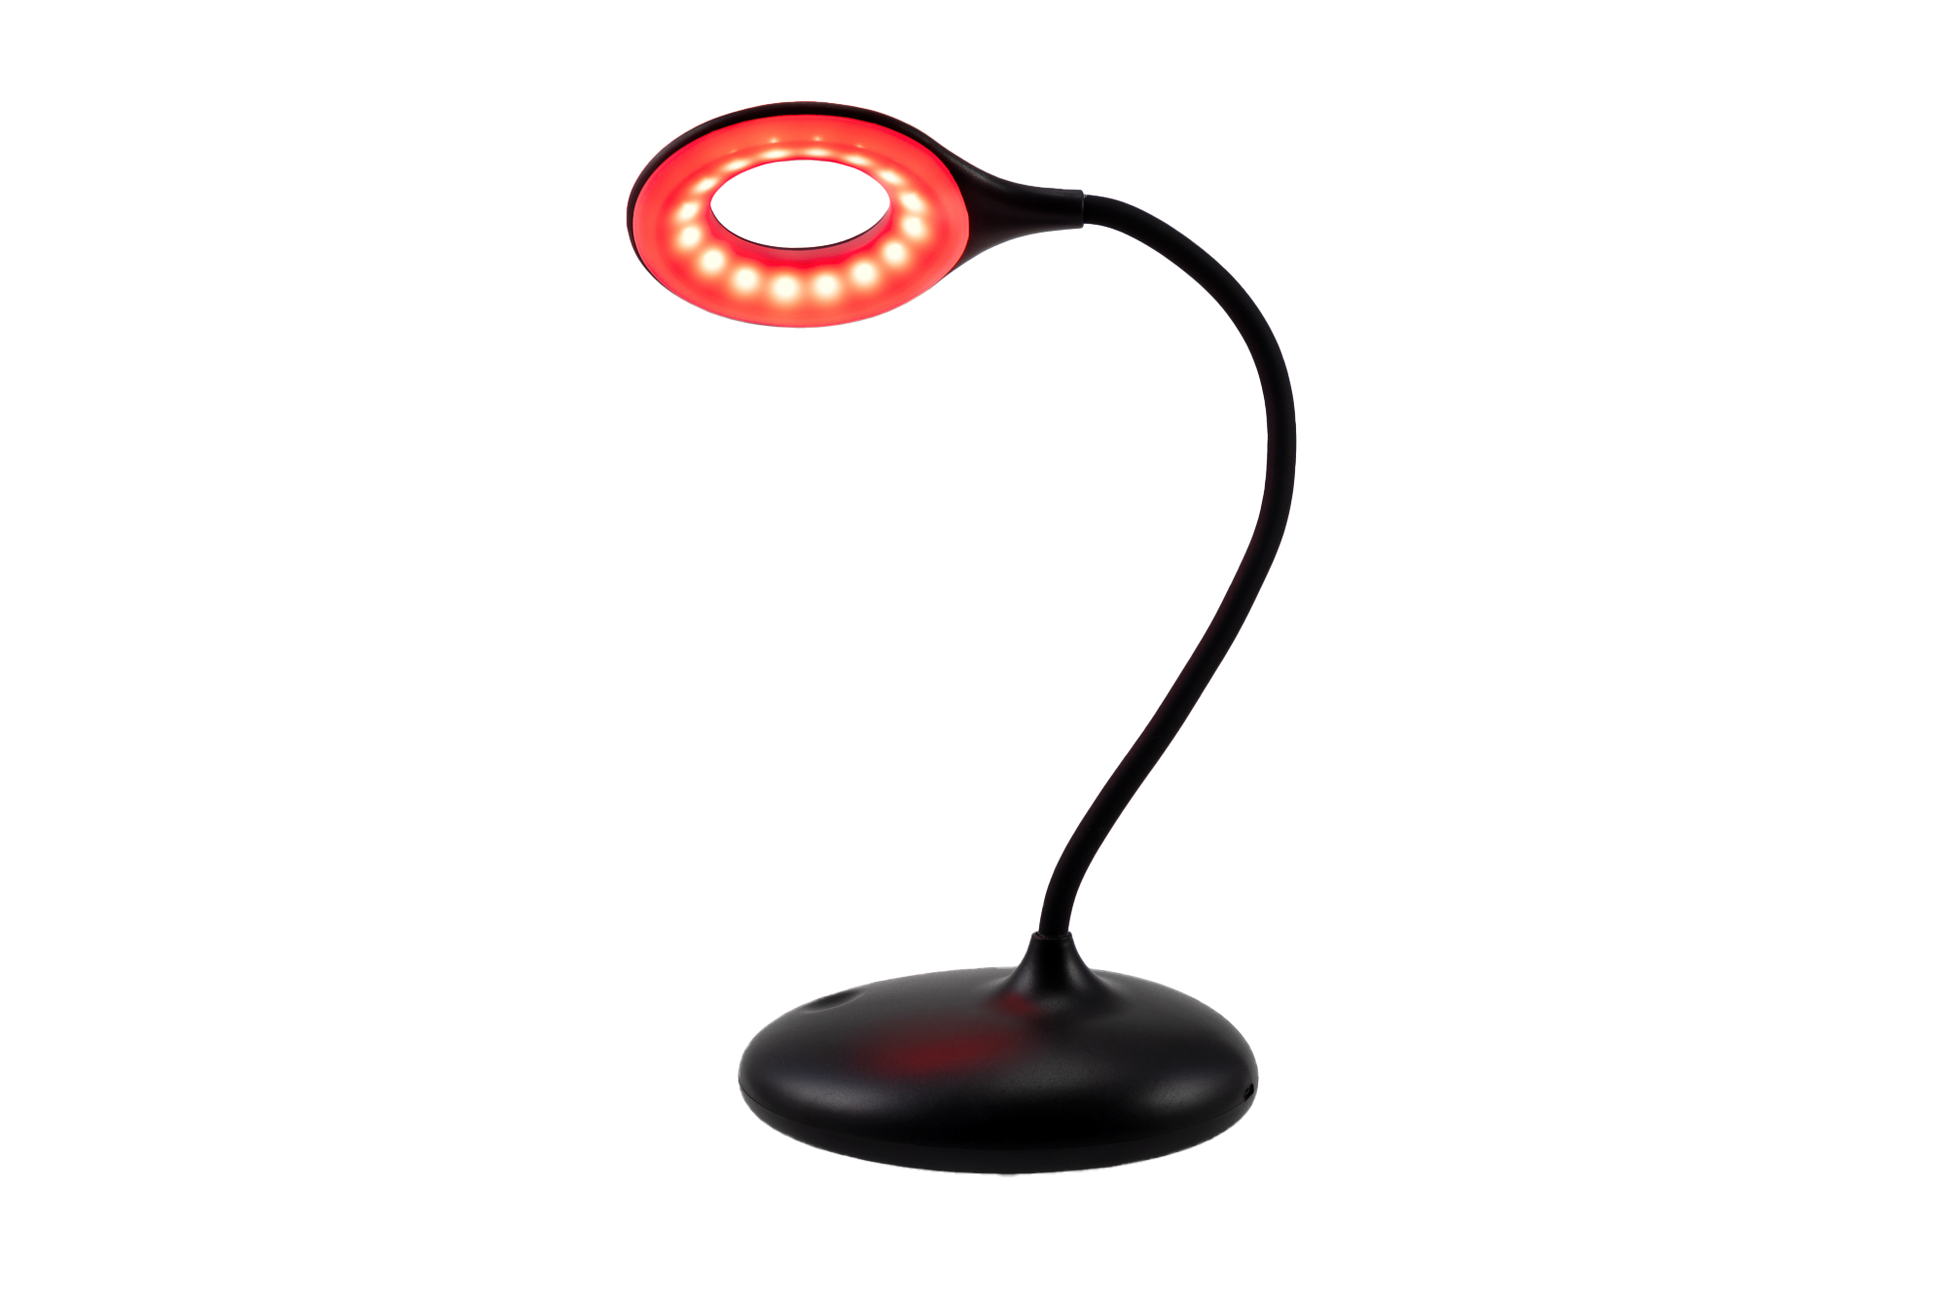 LED Rechargeable Lamp Portable Learning Desk Lamp Neck Lamp Eye